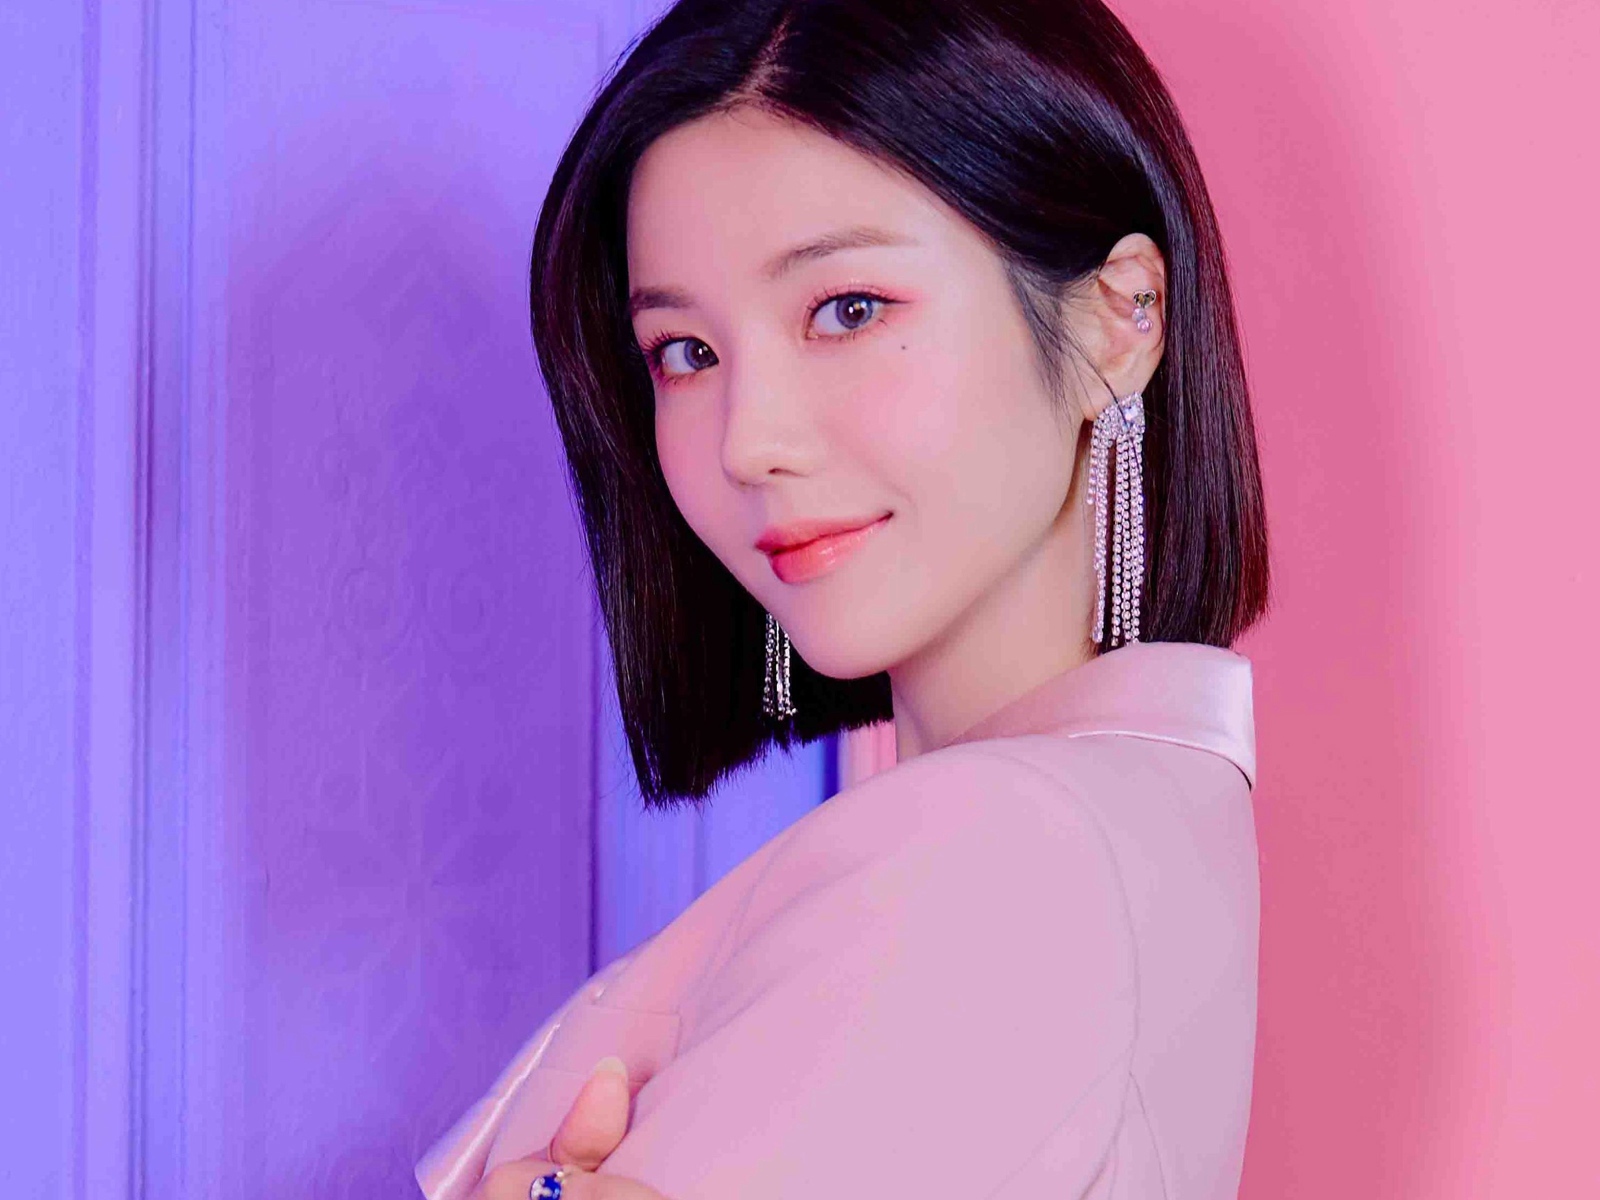 Милая девушка азиатка с короткой стрижкой на розовом фоне 